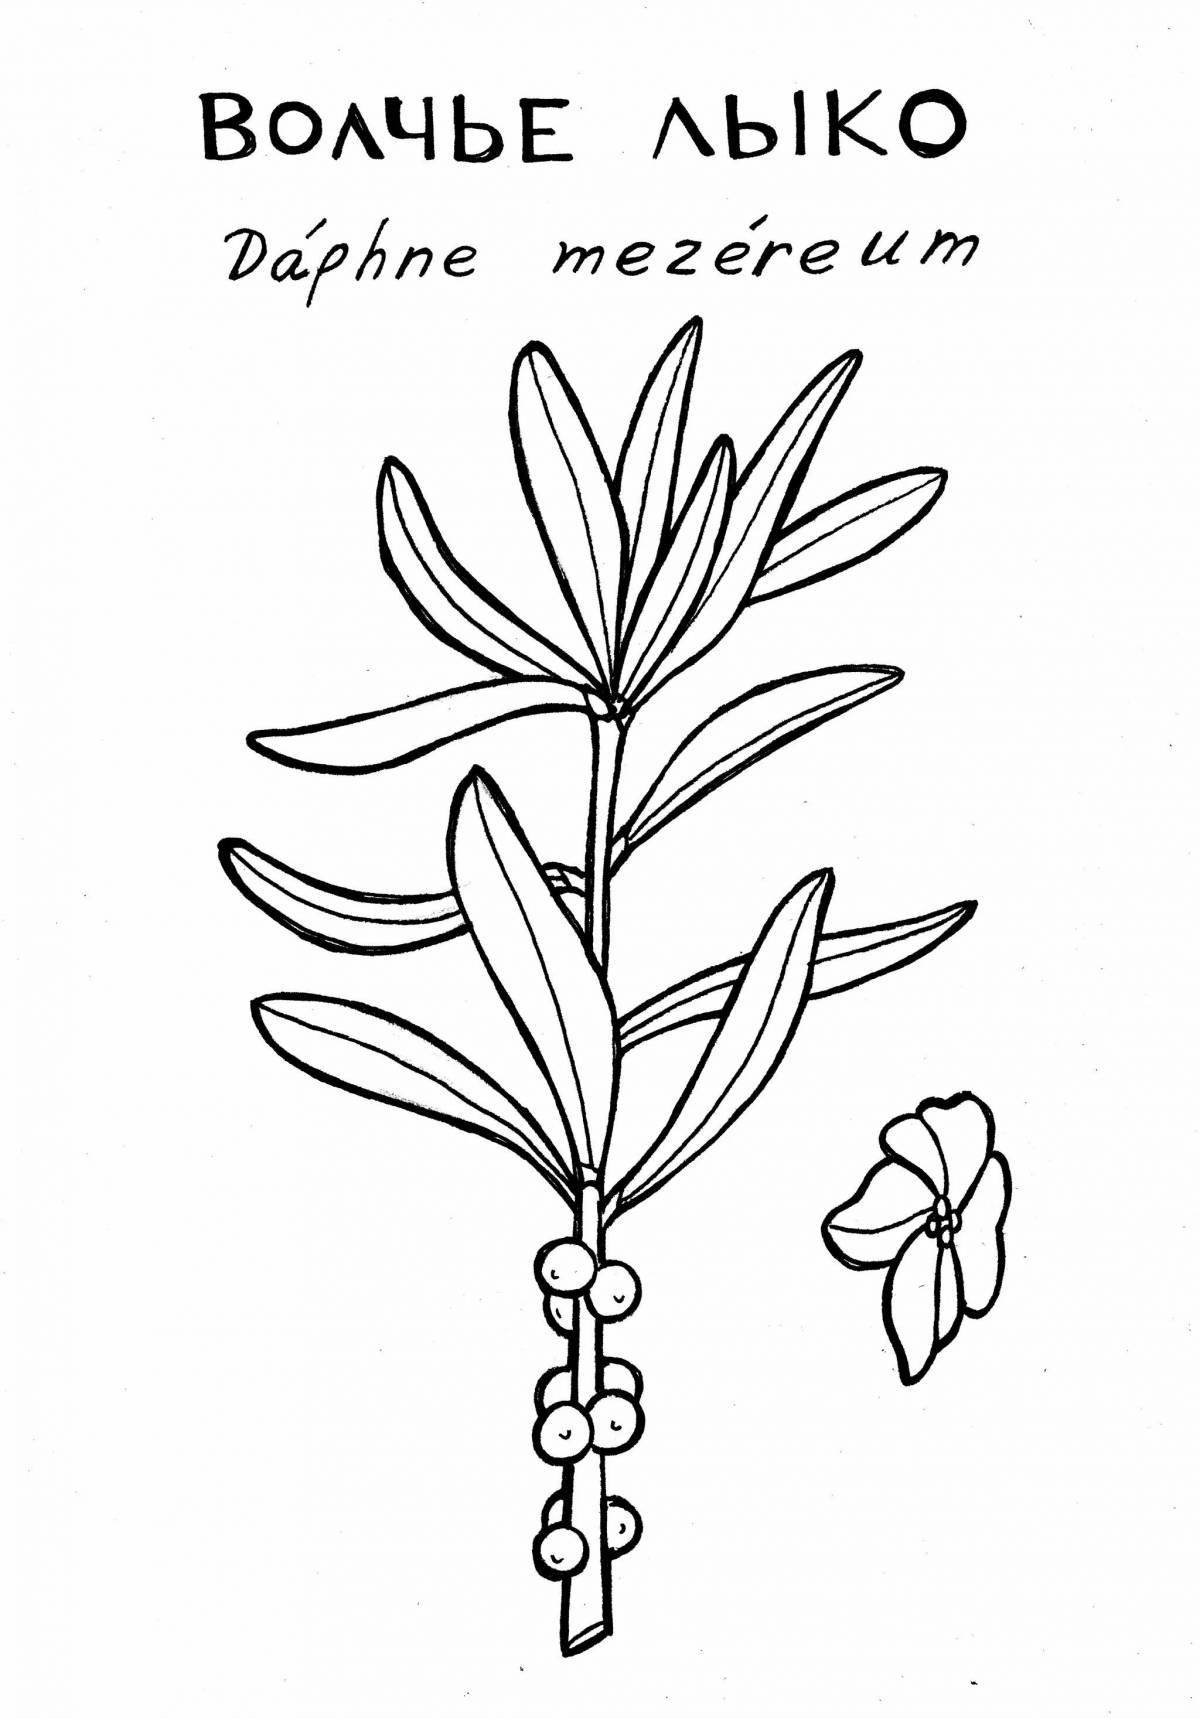 Adorable poisonous plants coloring book for kids